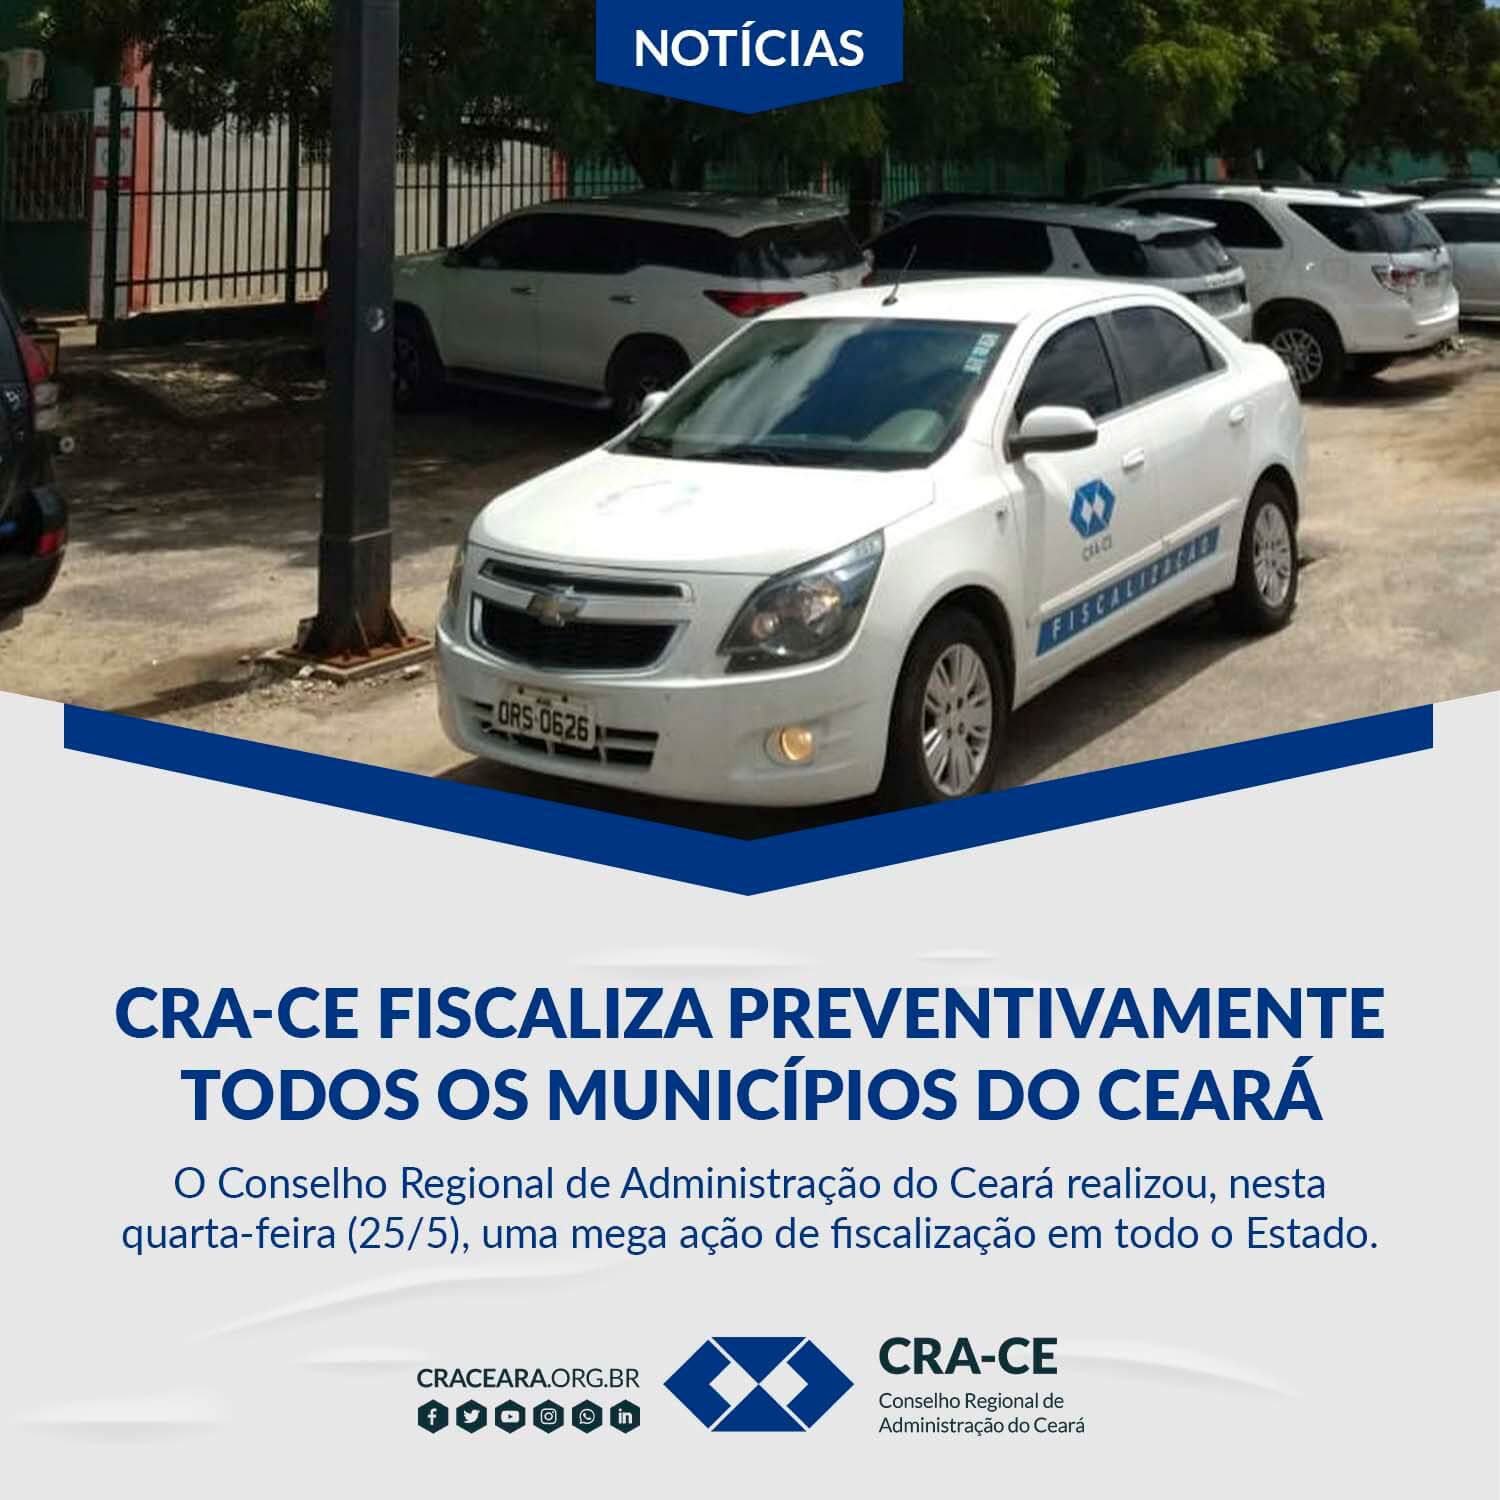 2022-05-11-cra-ce-fiscaliza-preventivamente-municipios.jpg